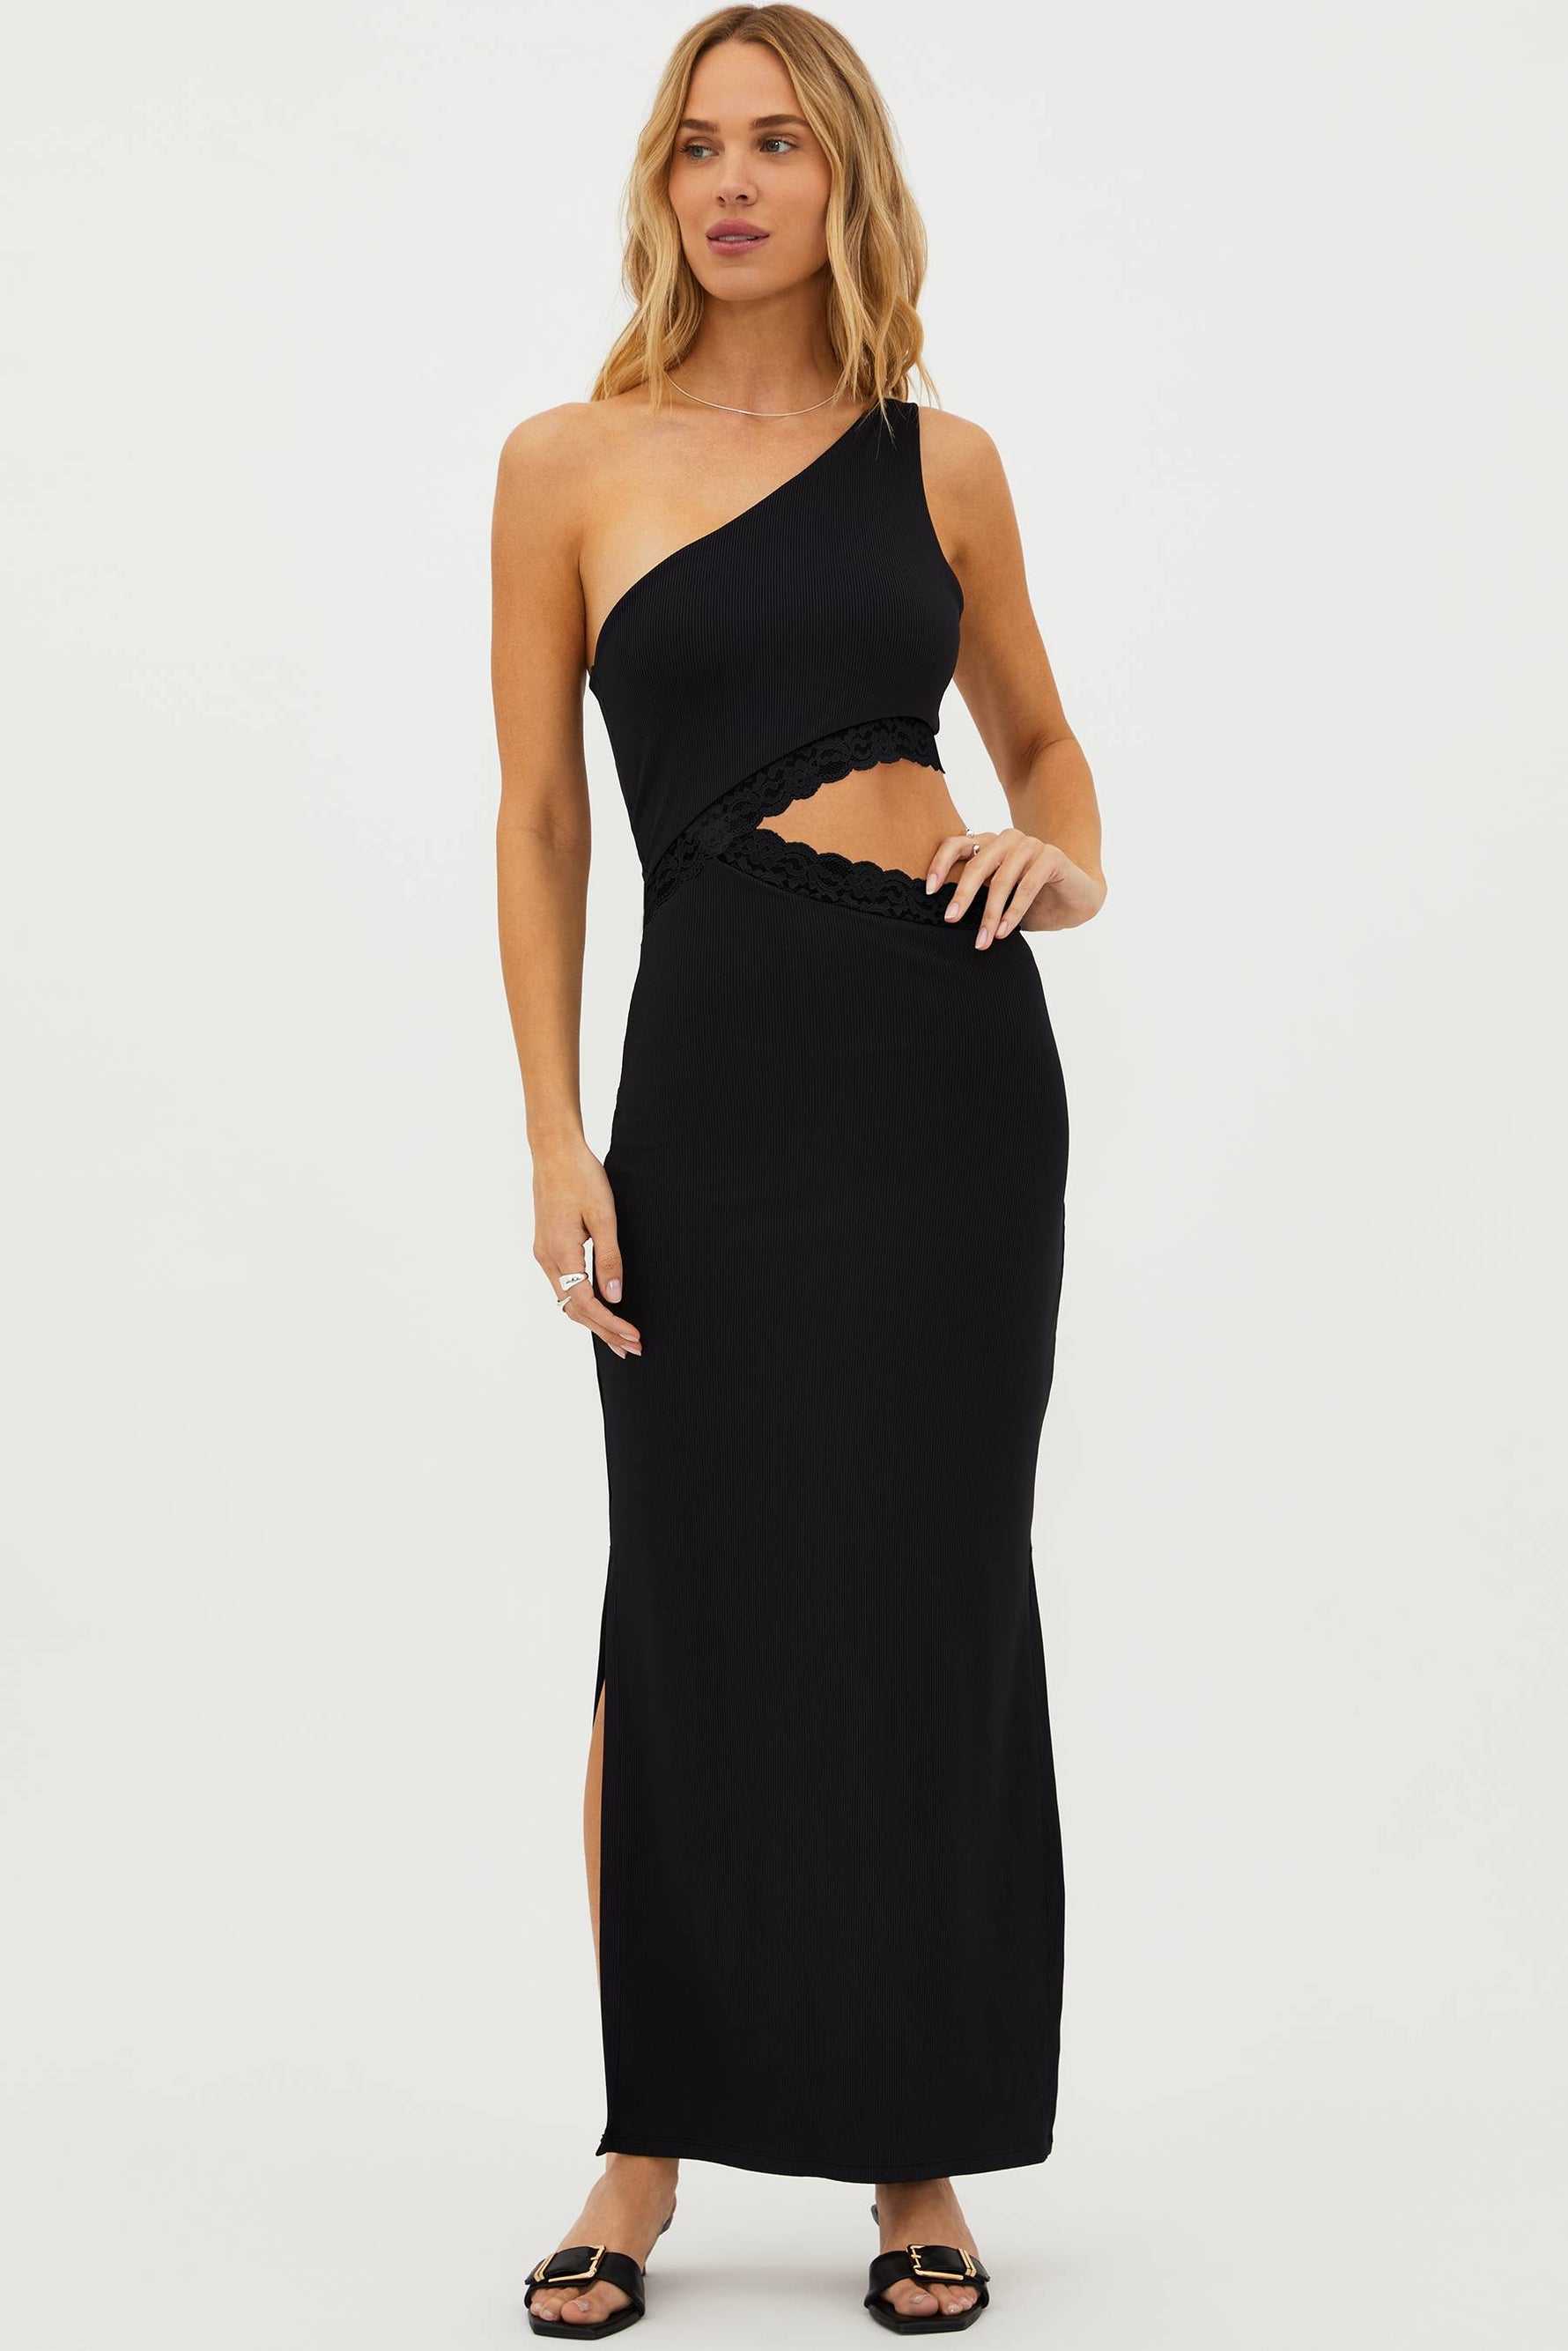 Genevieve Lace Dress Black